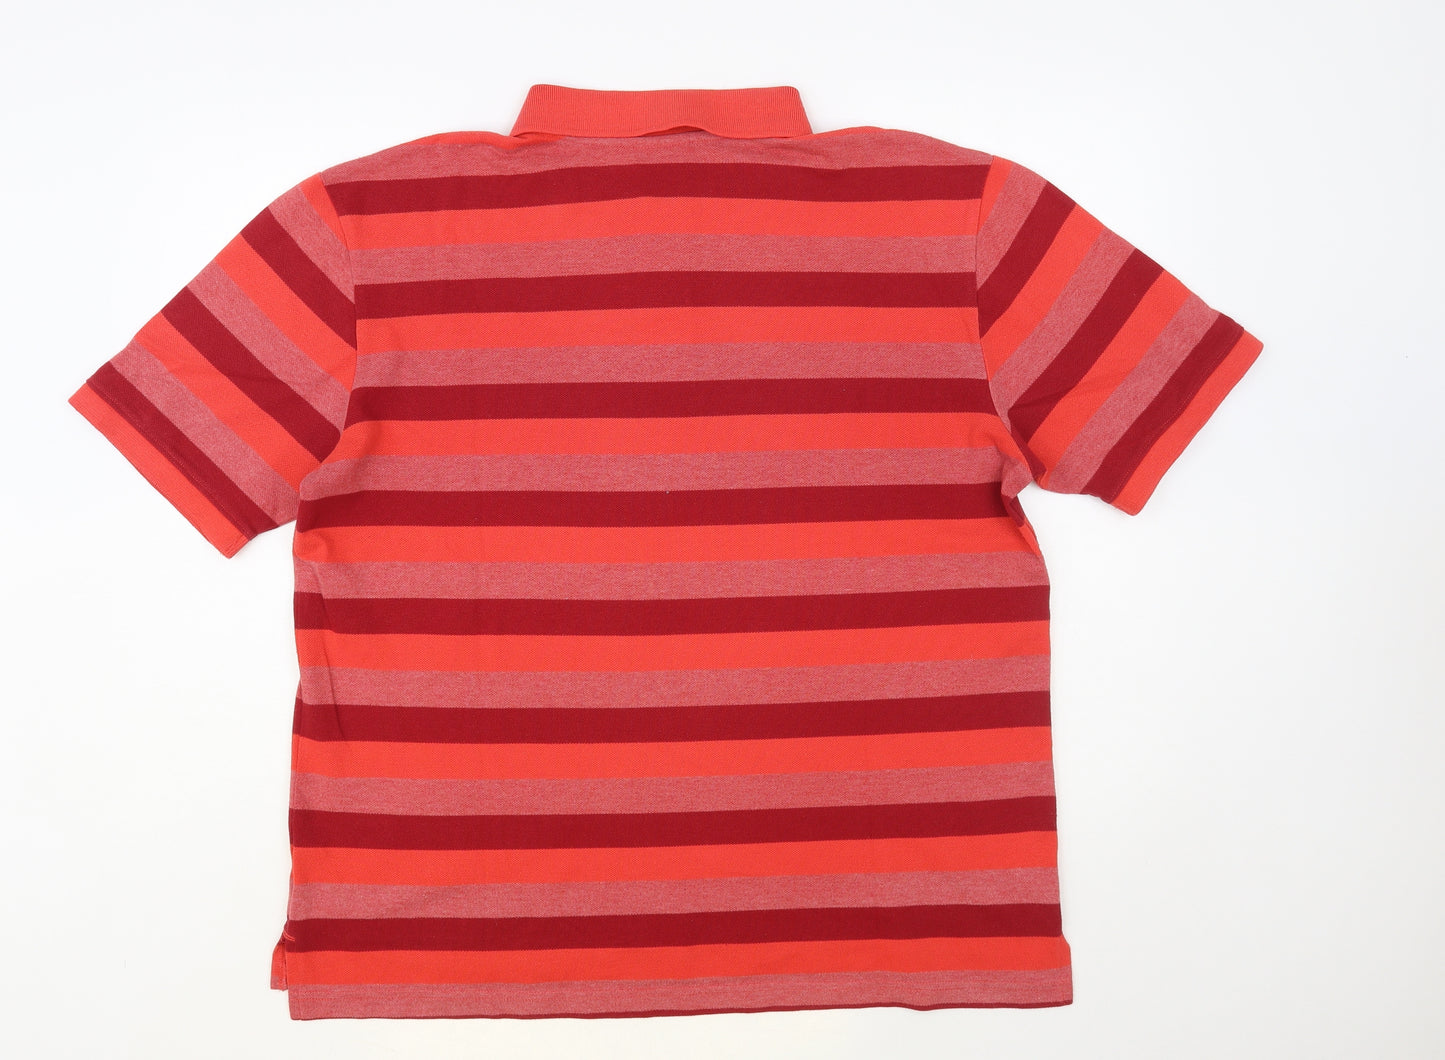 Slazenger Mens Red Striped Cotton Polo Size XL Collared Button